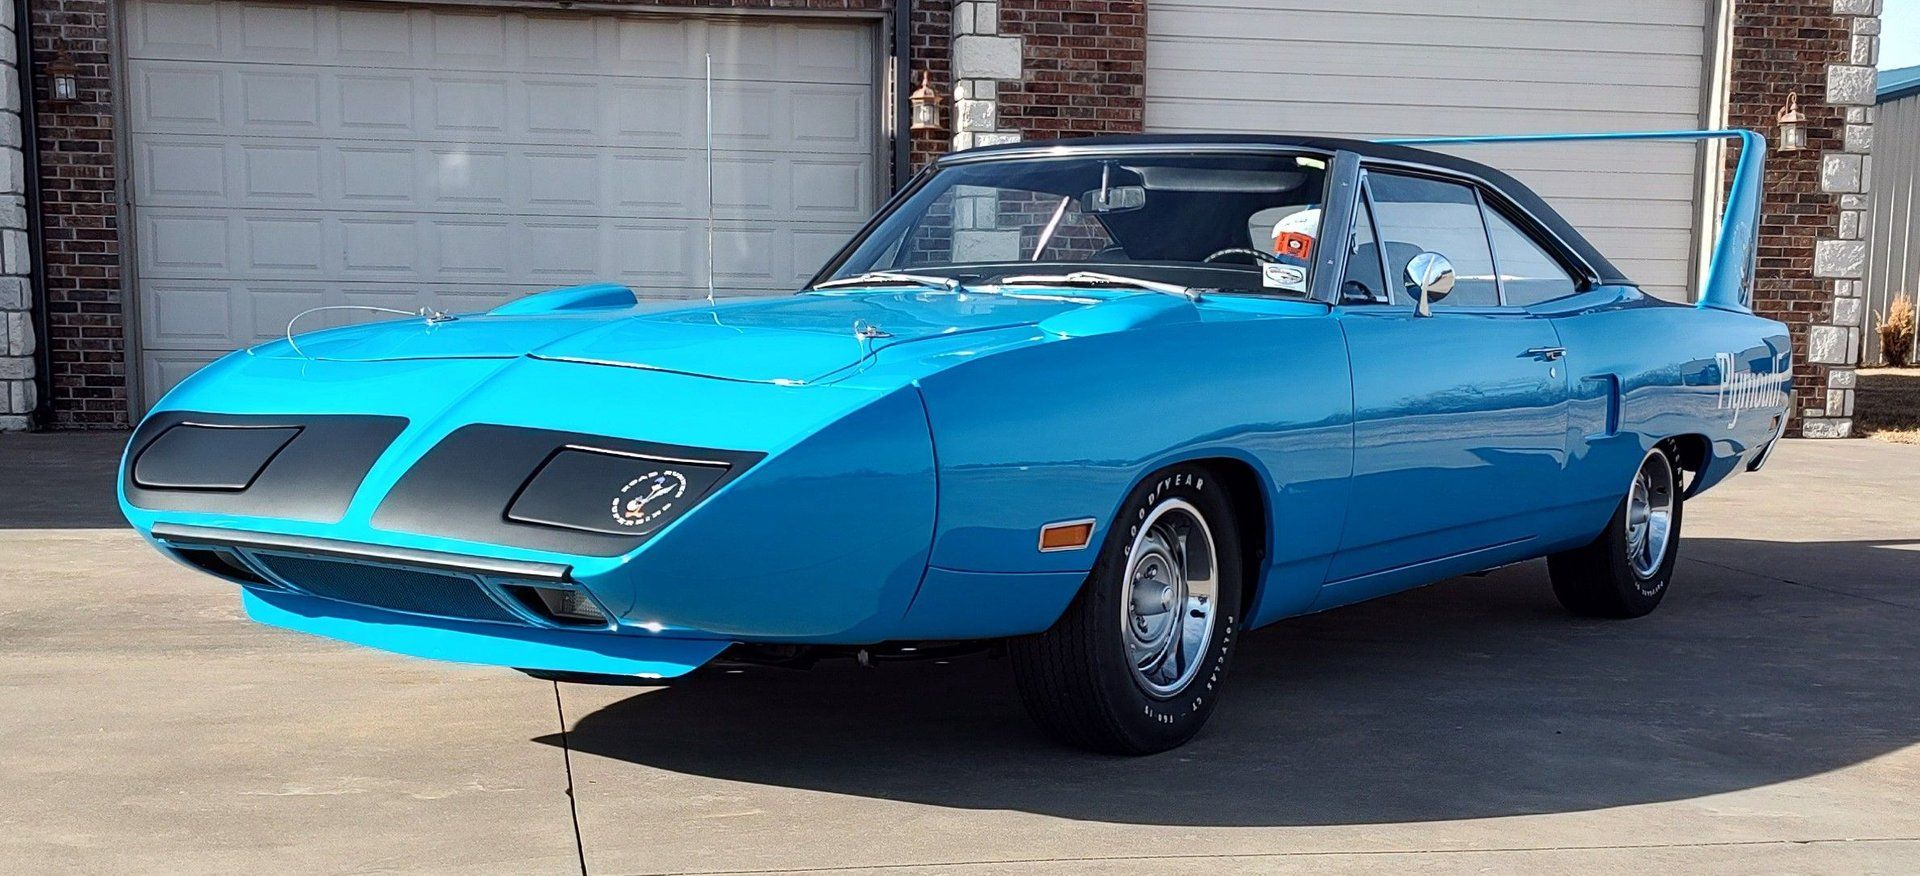 1970 Plymouth Superbird license plate car tag Road Runner Super BIRD petty blue